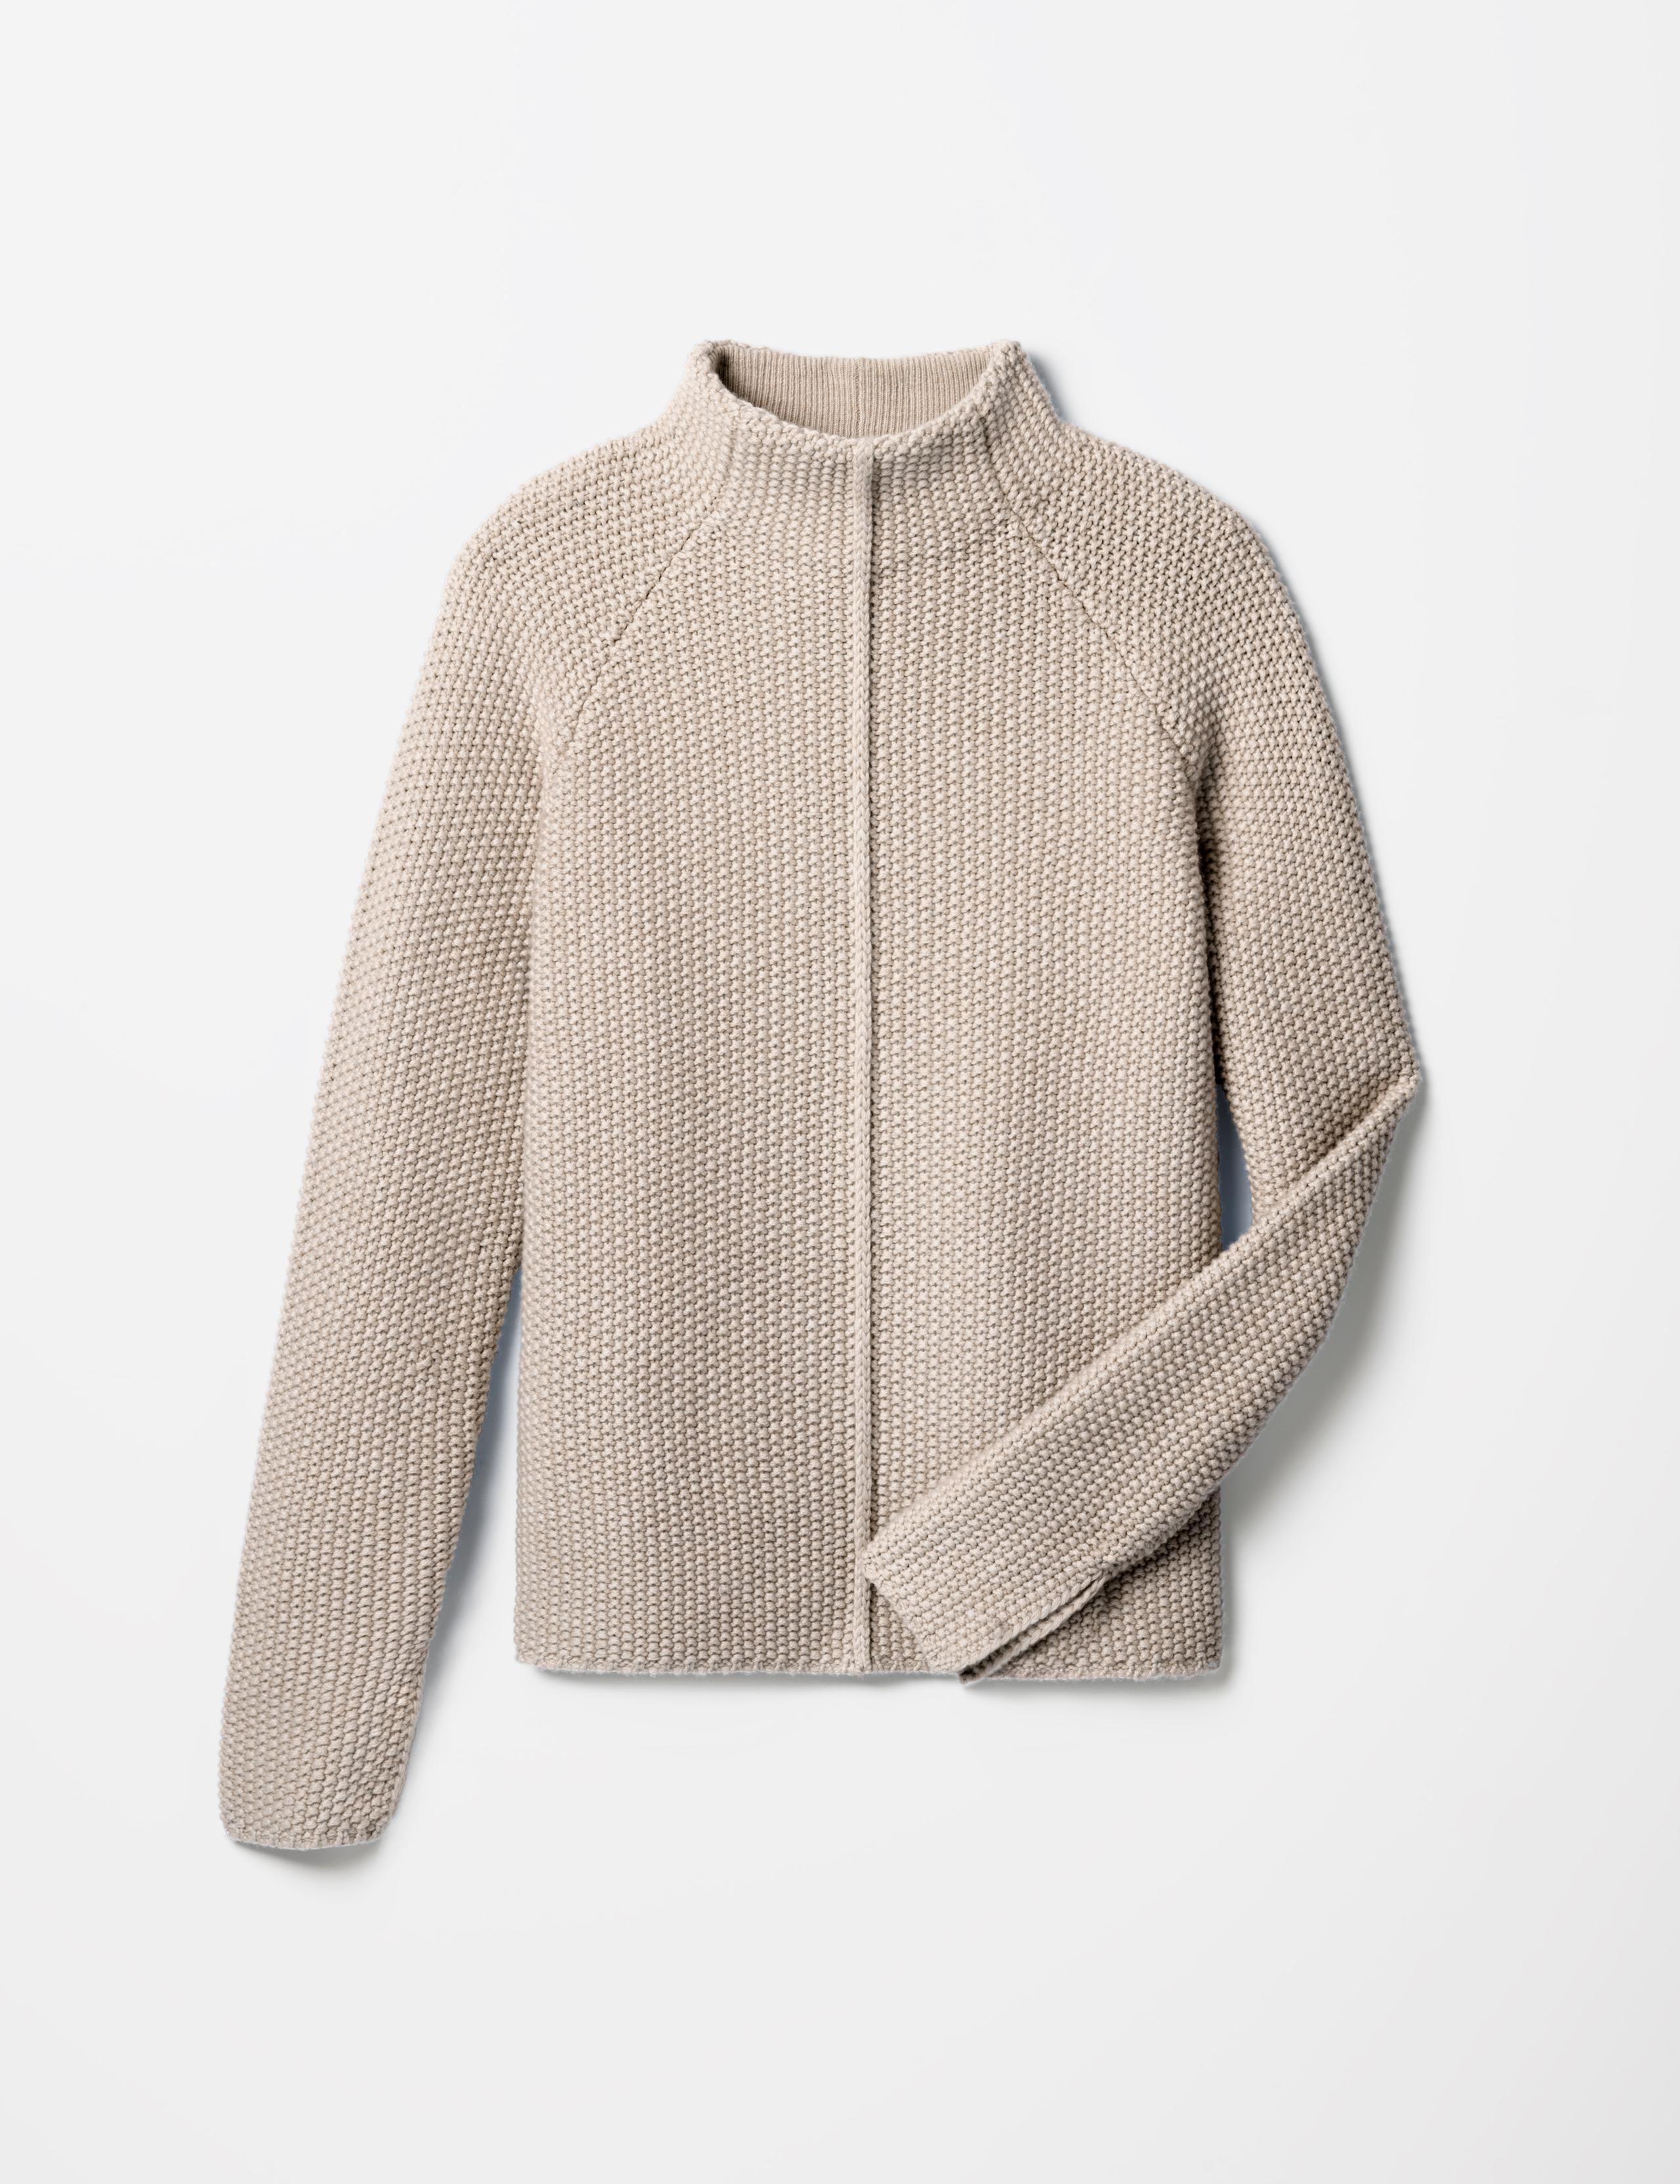 Studio laydown of Luxe Seamed Sweater